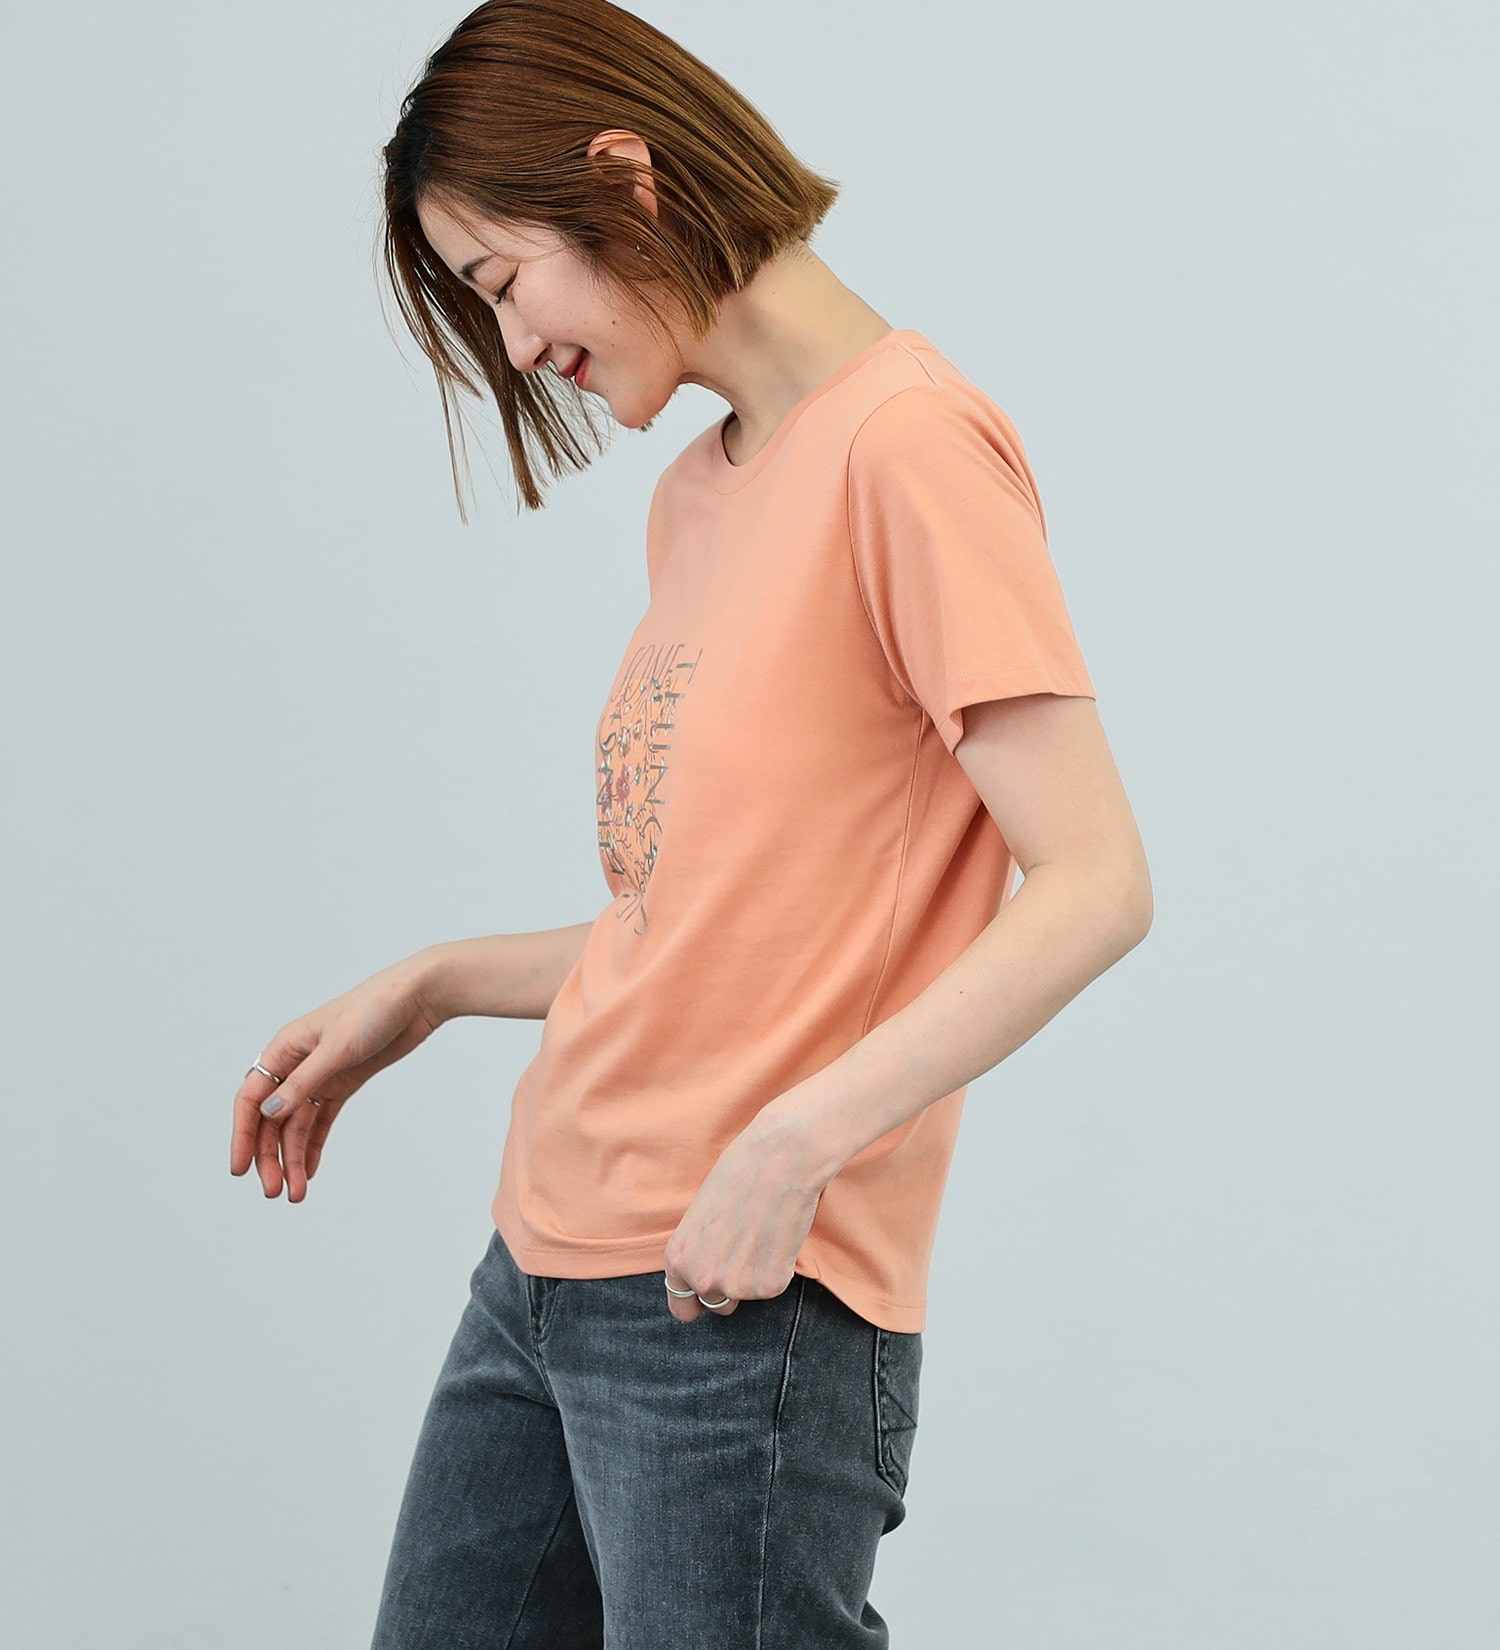 SOMETHING(サムシング)のSOMETHING フォイルプリントTシャツ【半袖】|トップス/Tシャツ/カットソー/レディース|オレンジ